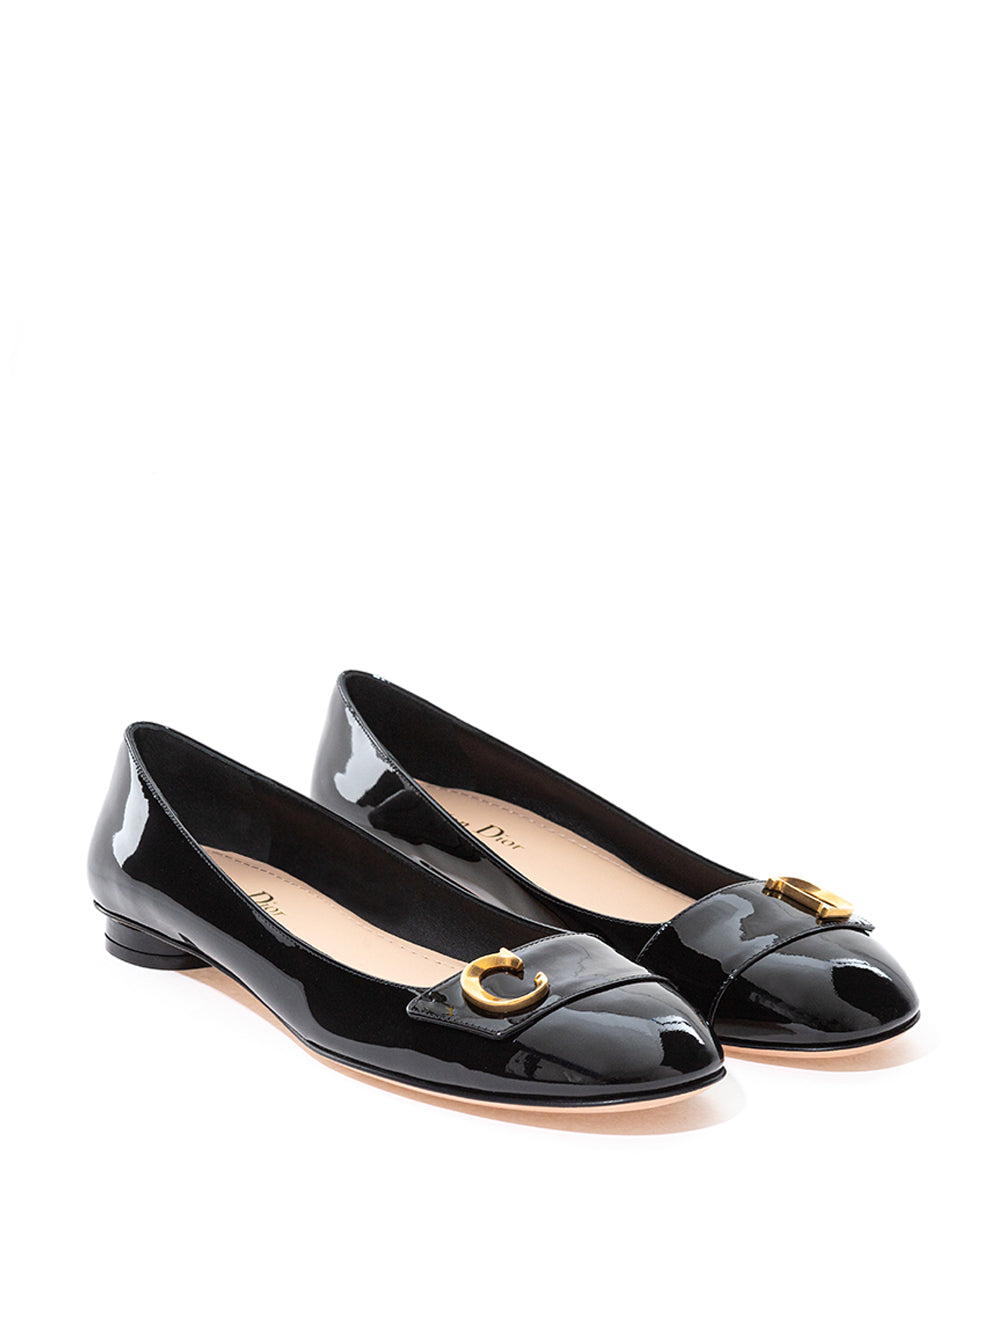 Dior Elegant Black Patent Leather Ballerina Flats